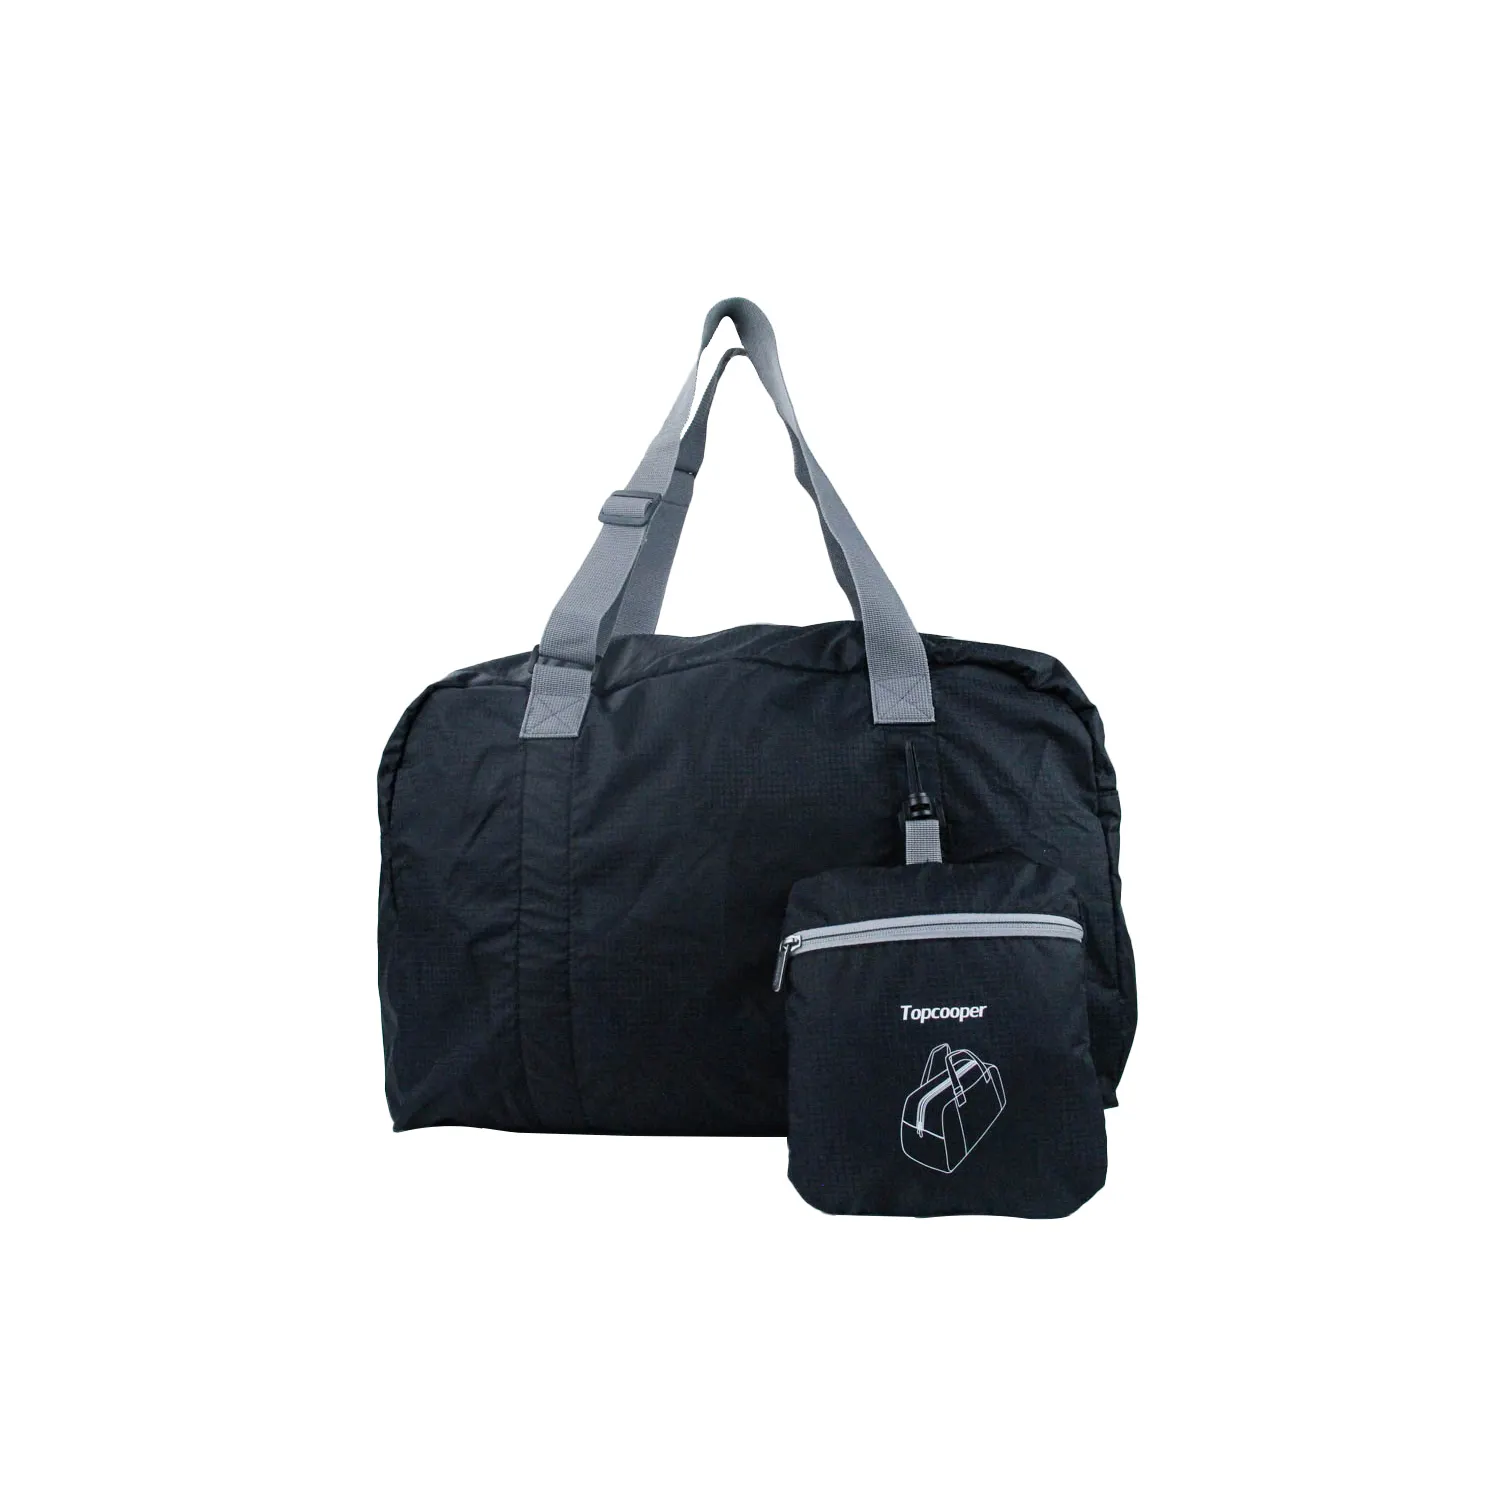 Topcooper Nylon Lightweight Foldable Portable Duffle Bag Travel Tote Bag Luggage Storage Sport Duffle Pack for Men Women